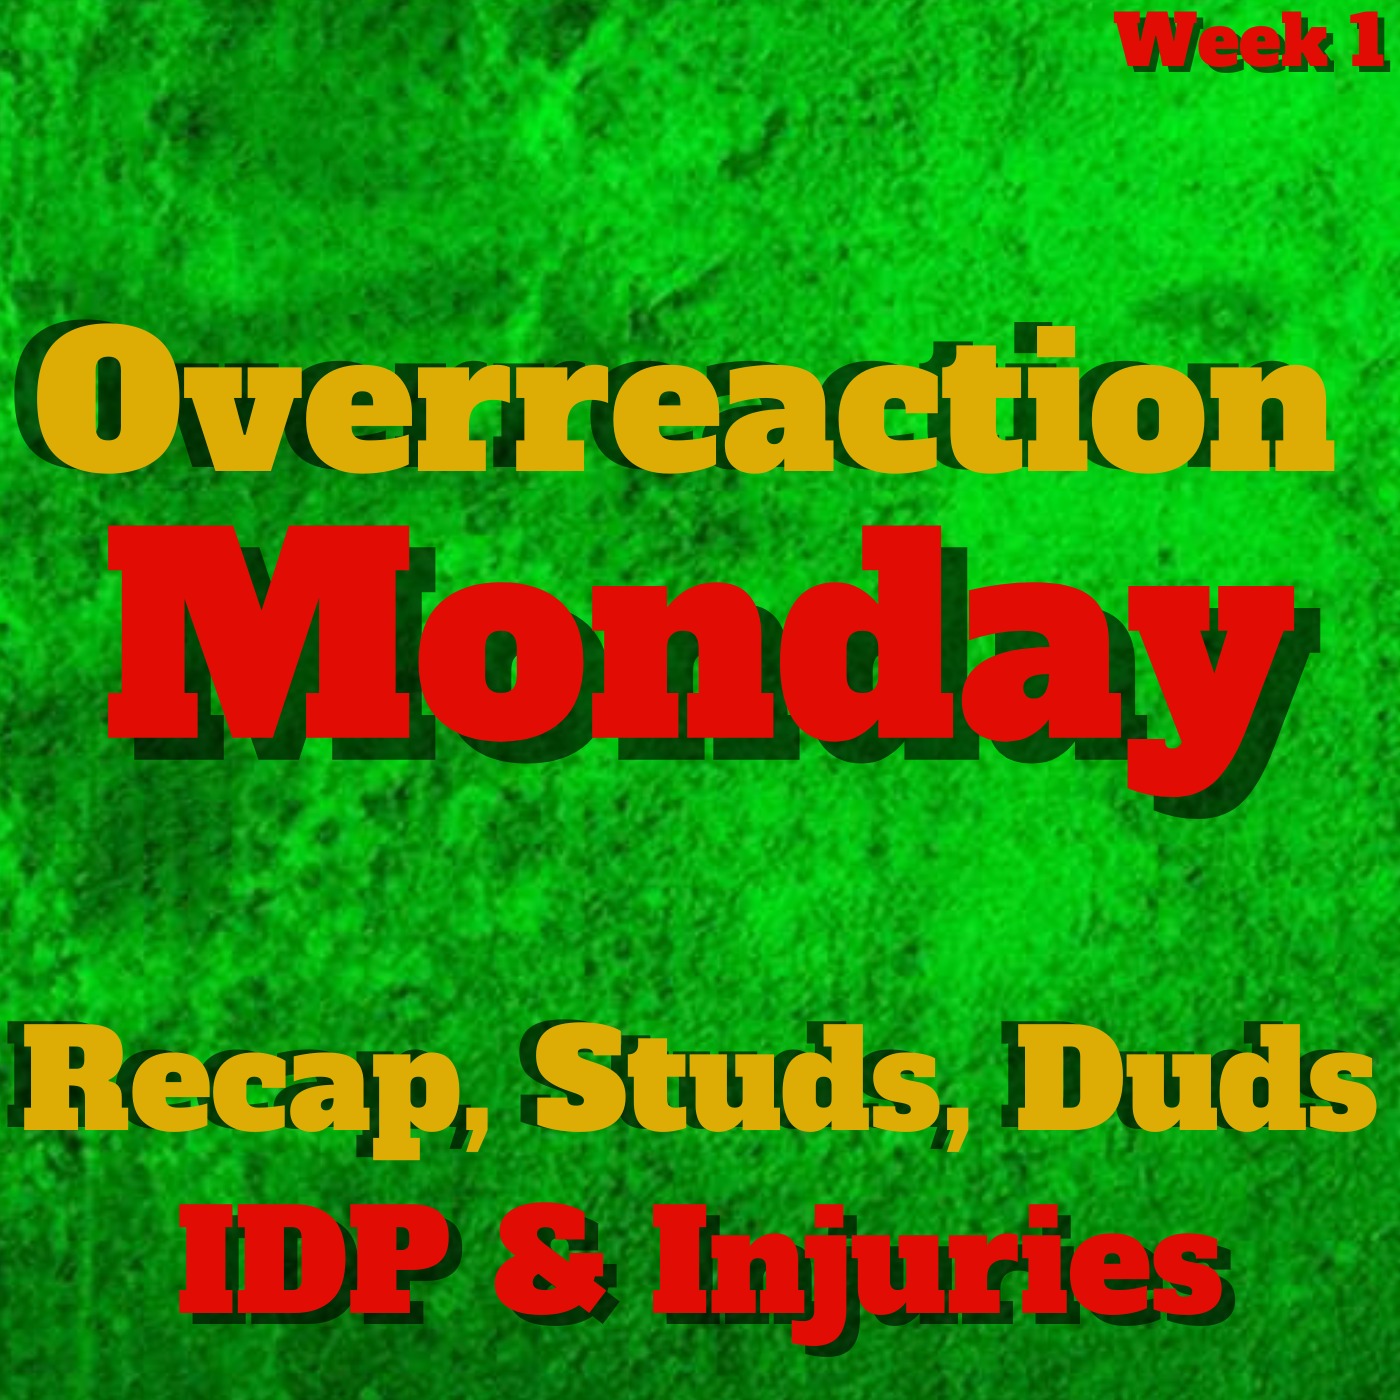 Fantasy Football OverReaction Monday, Week 1 Recap, Studs, Duds, Injuries & IDP Image